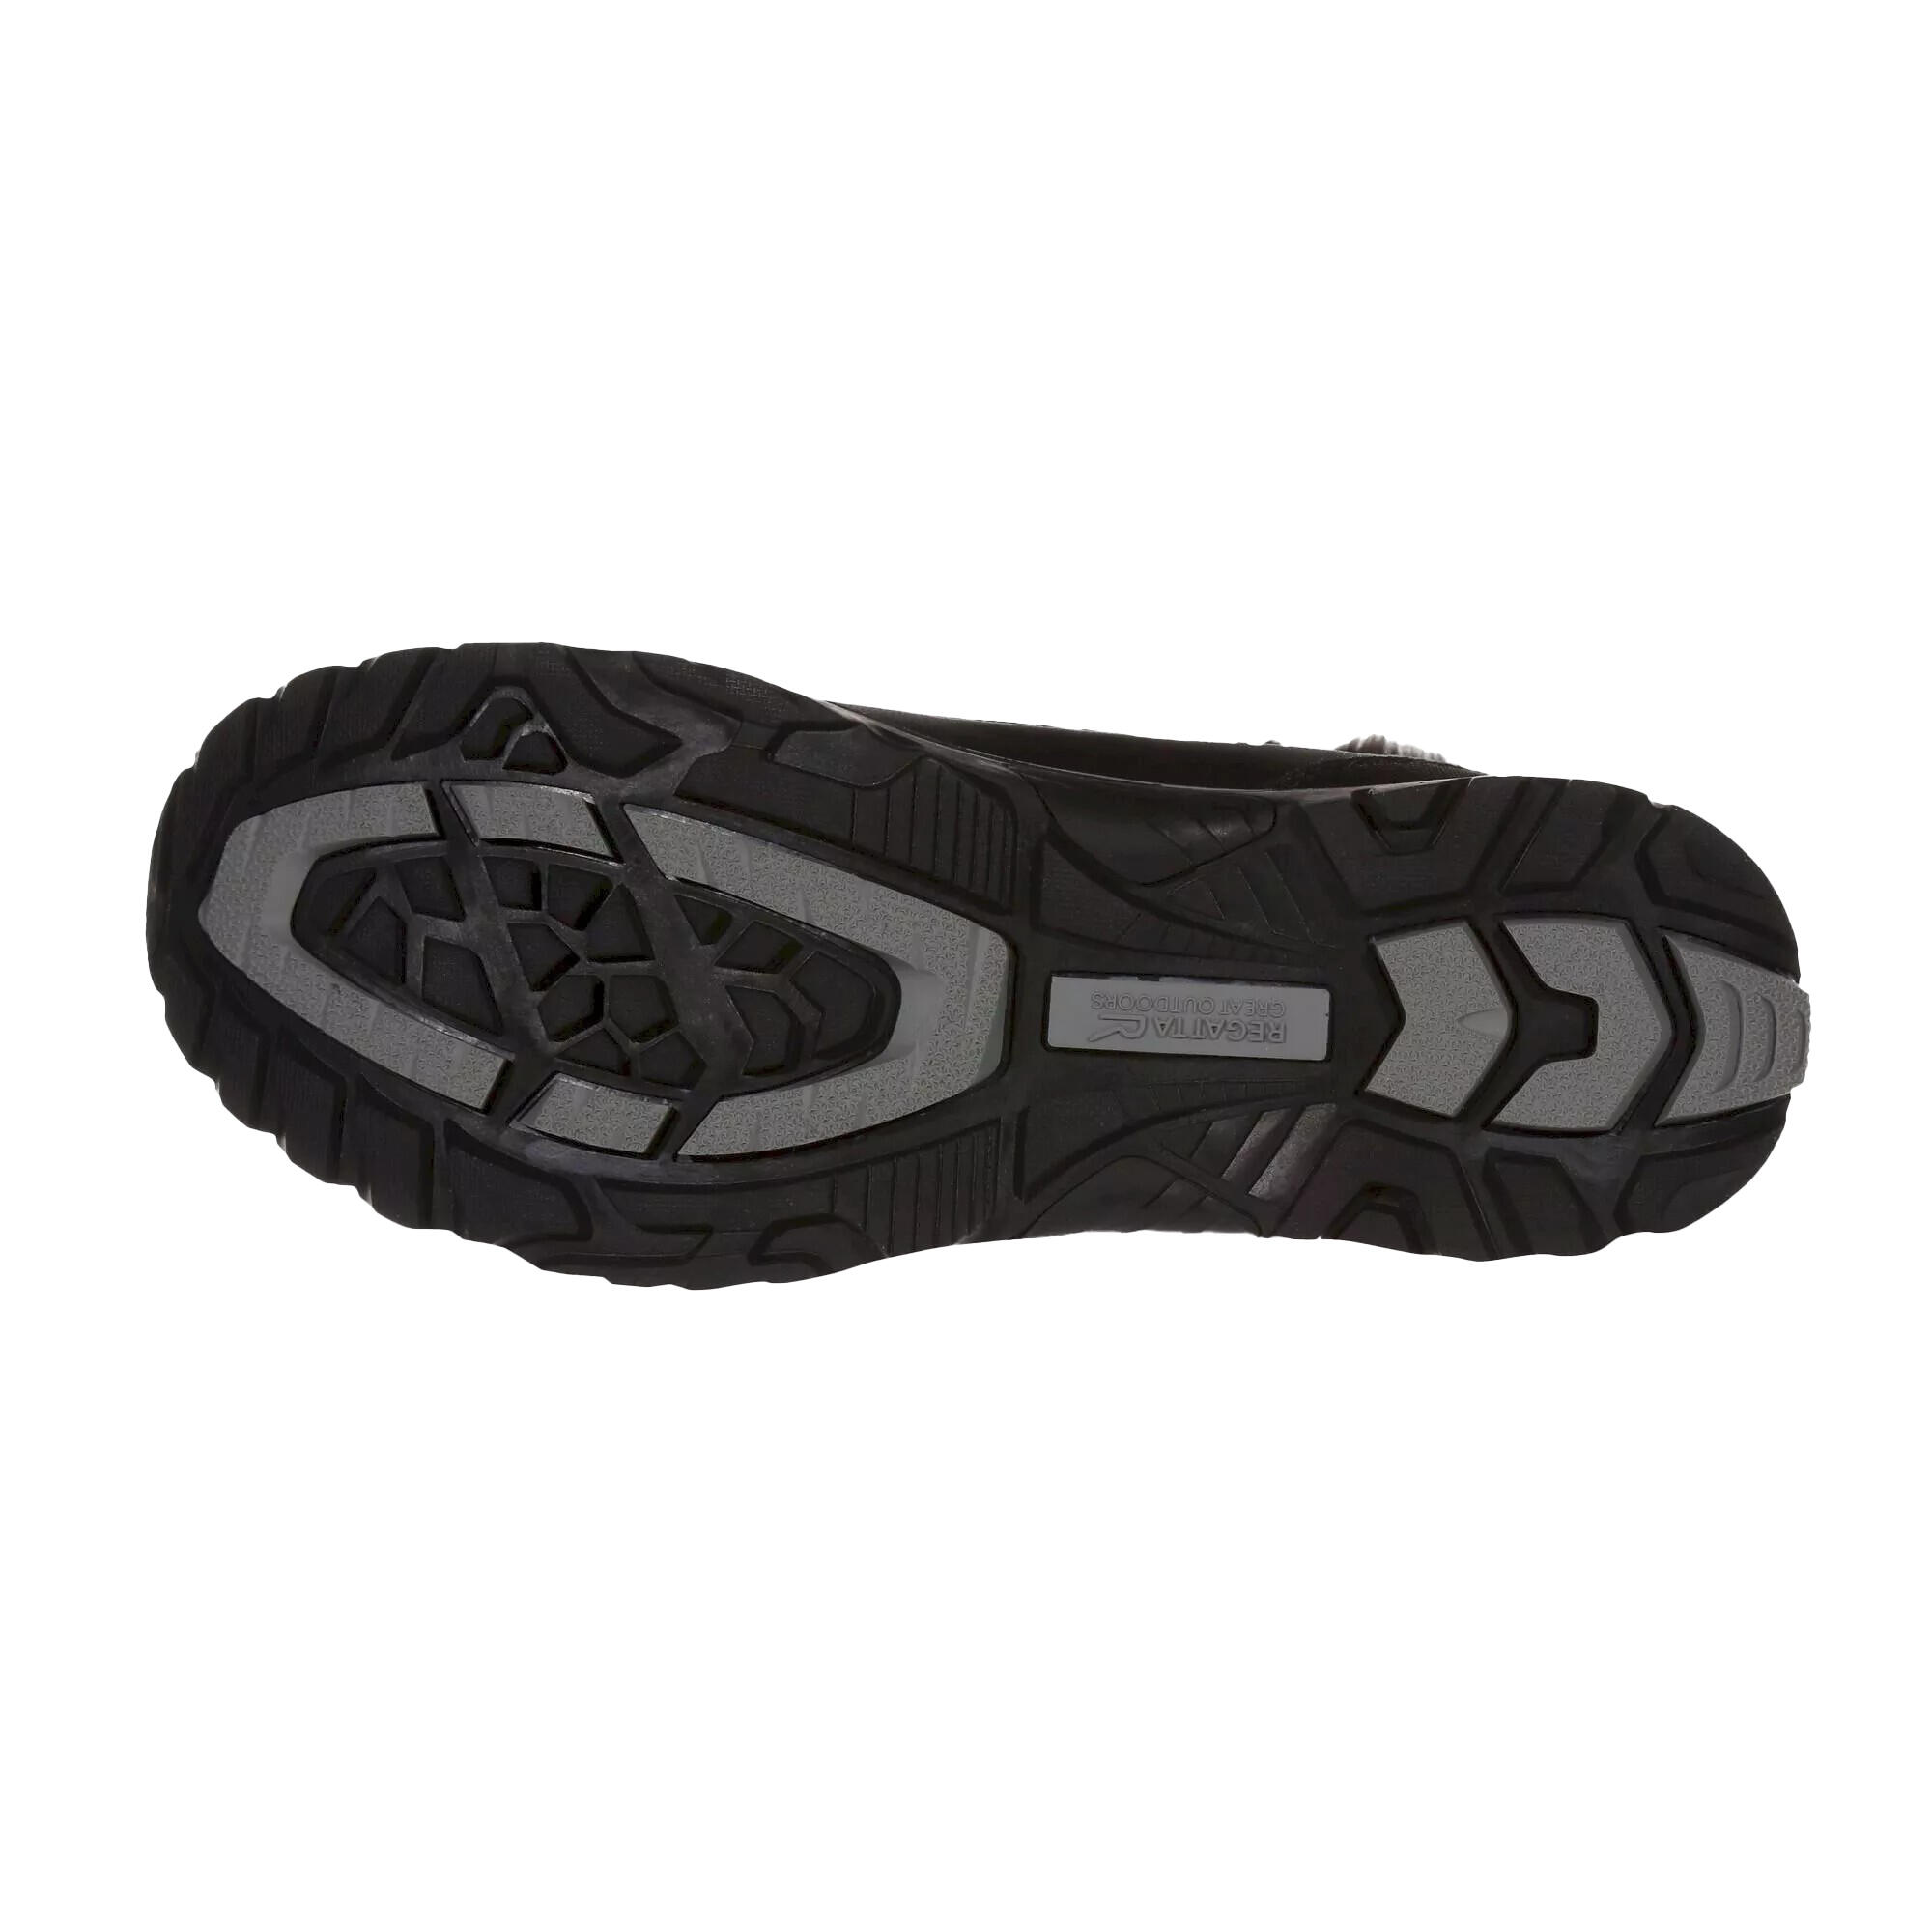 Womens/Ladies Hawthorn Evo Walking Boots (Black/Granite) 4/5